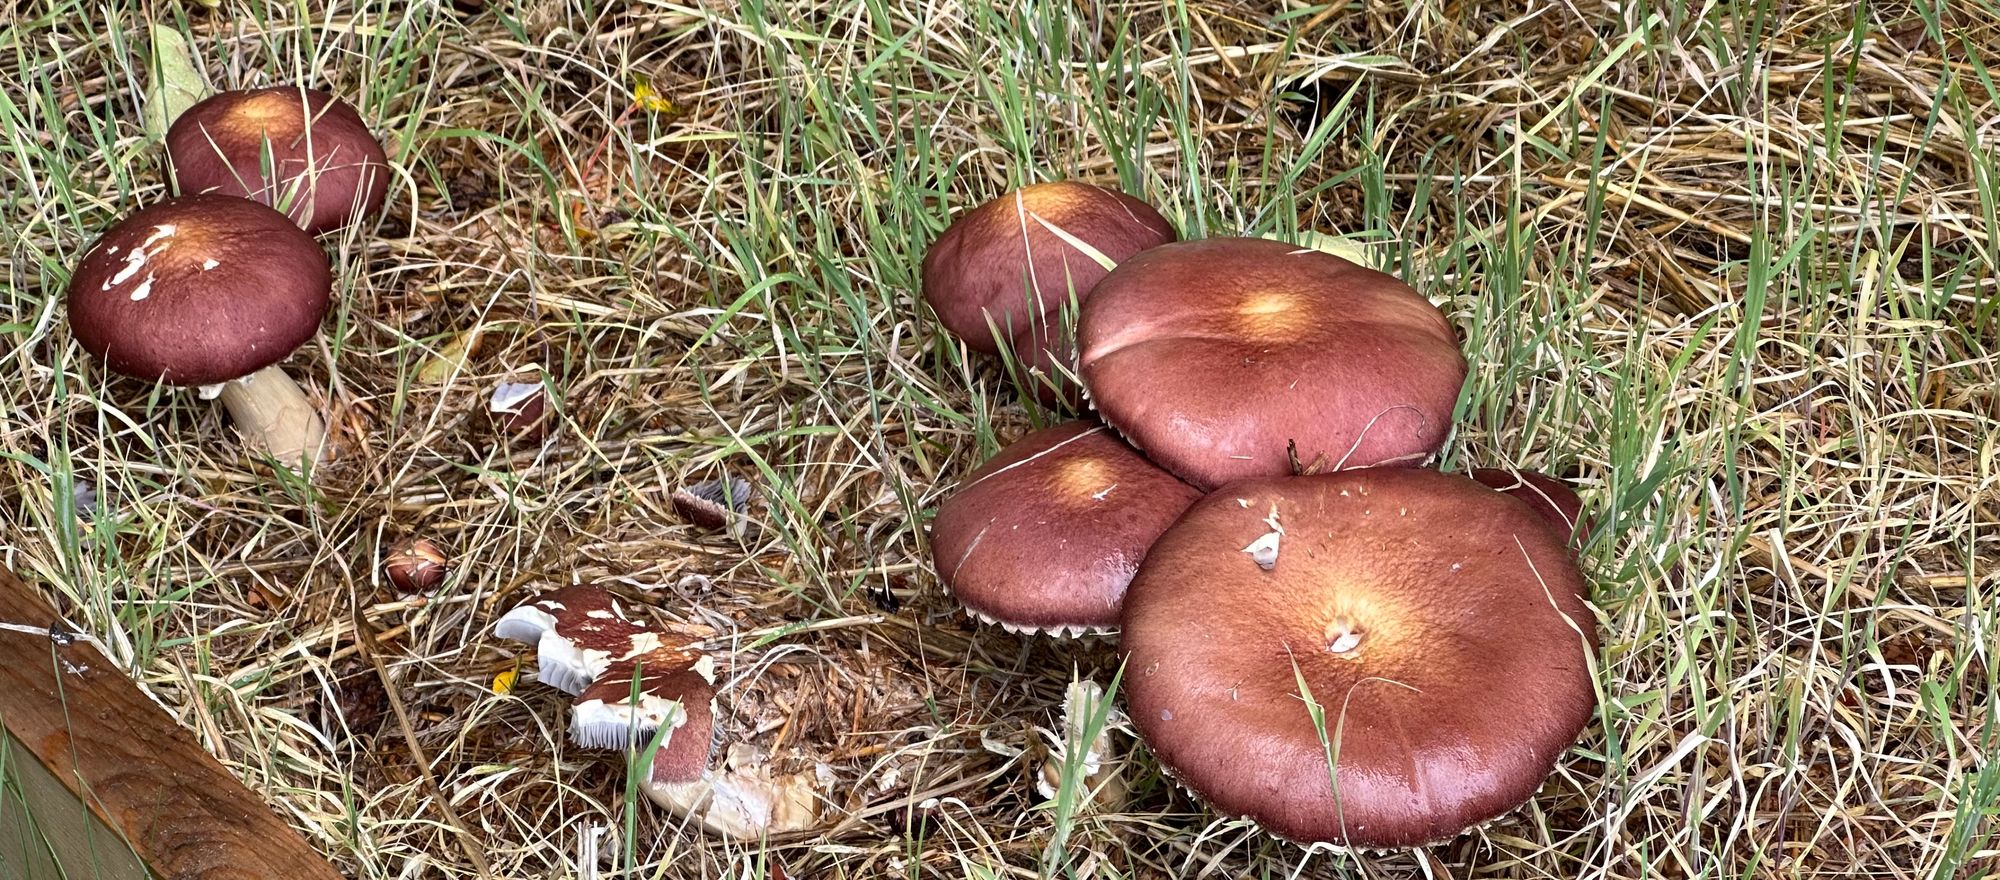 Mushrooms = ER Visit